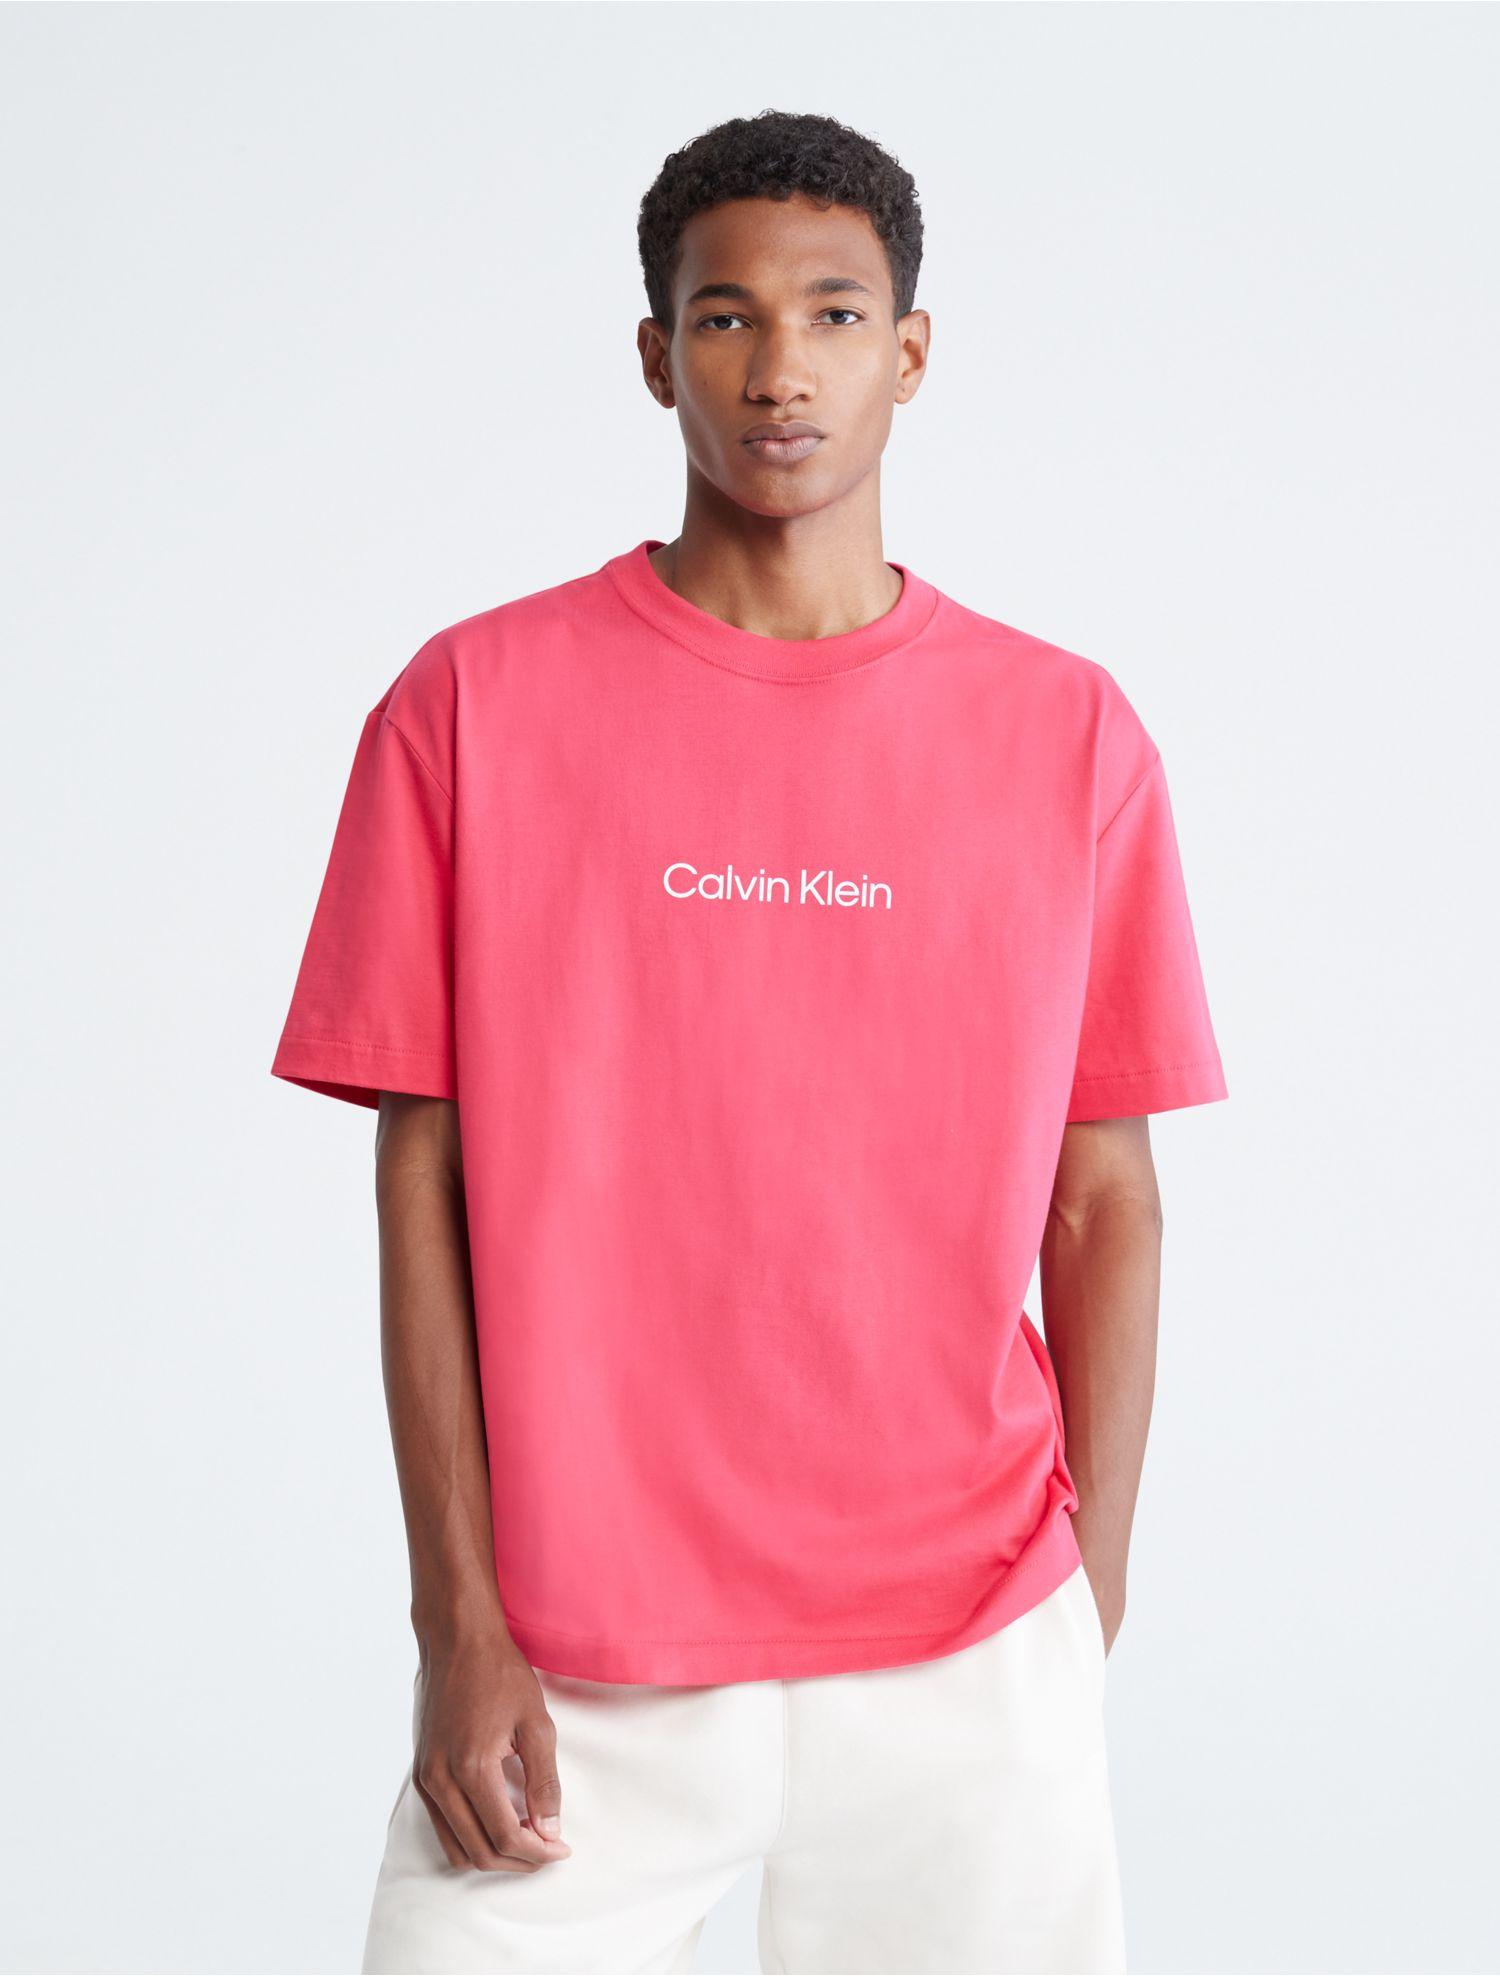 Calvin Klein Relaxed Fit Standard Logo Crewneck T-shirt in Pink for Men